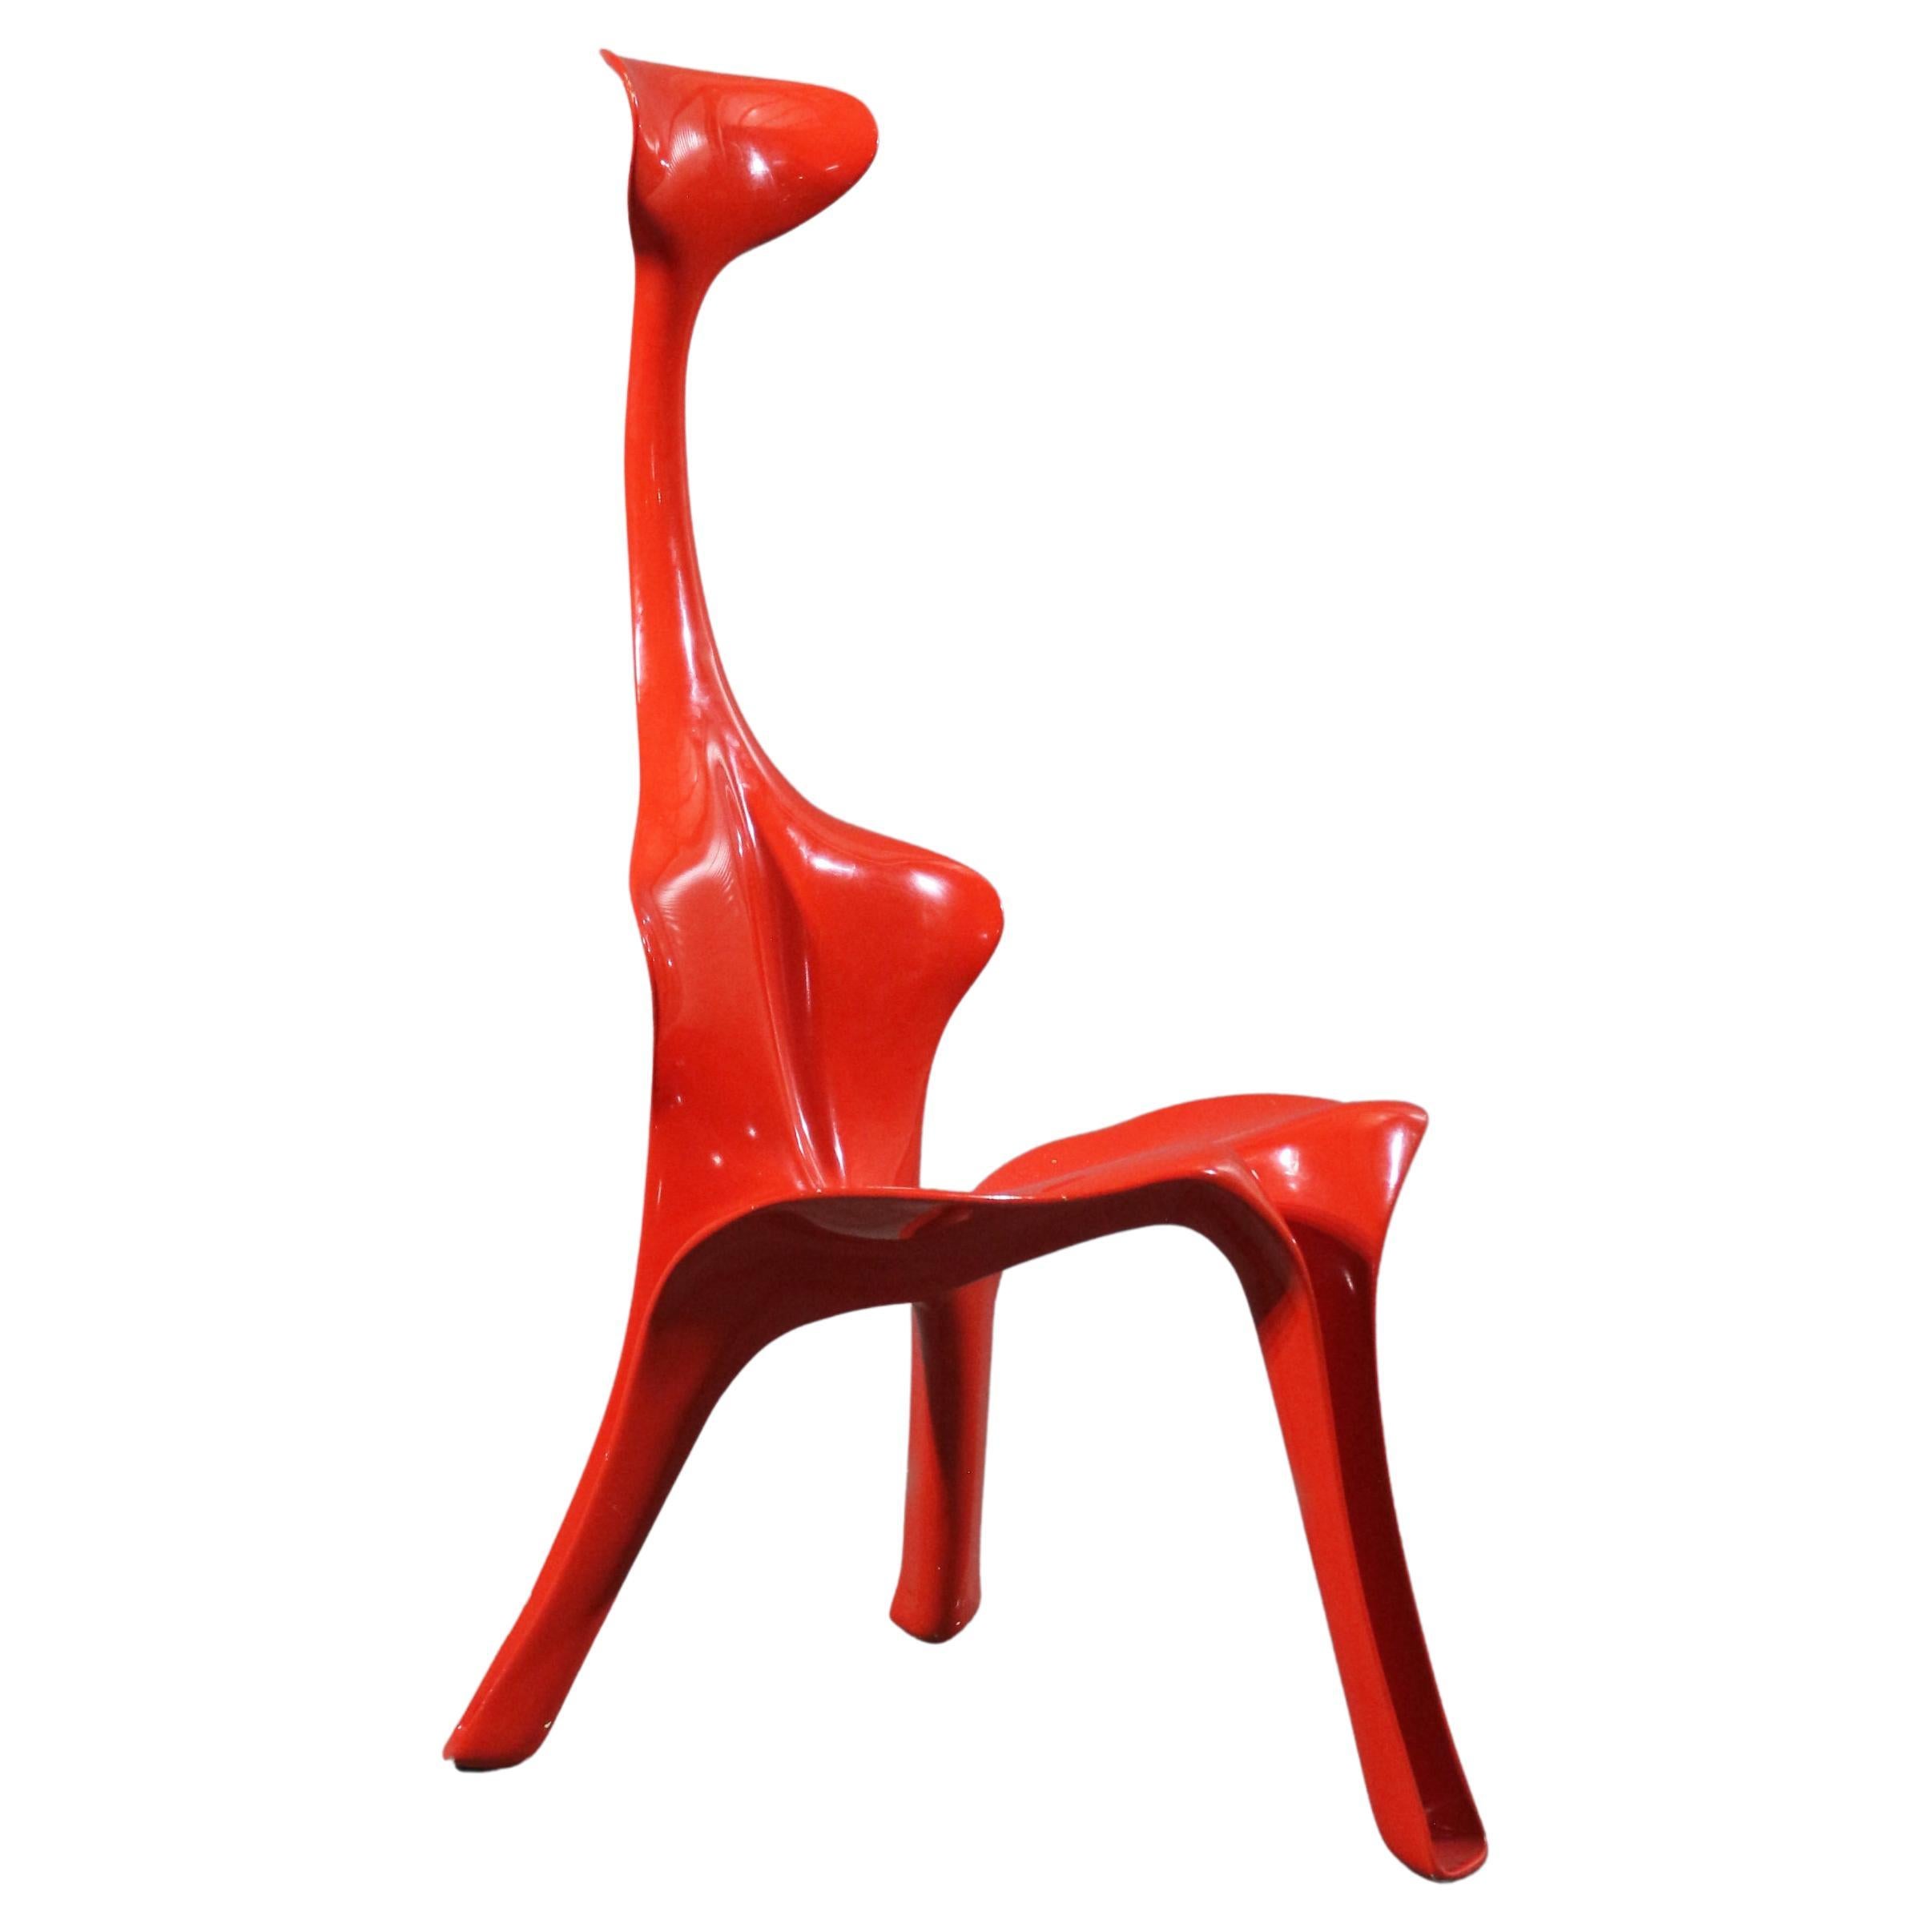 1967, Sculptural Chair